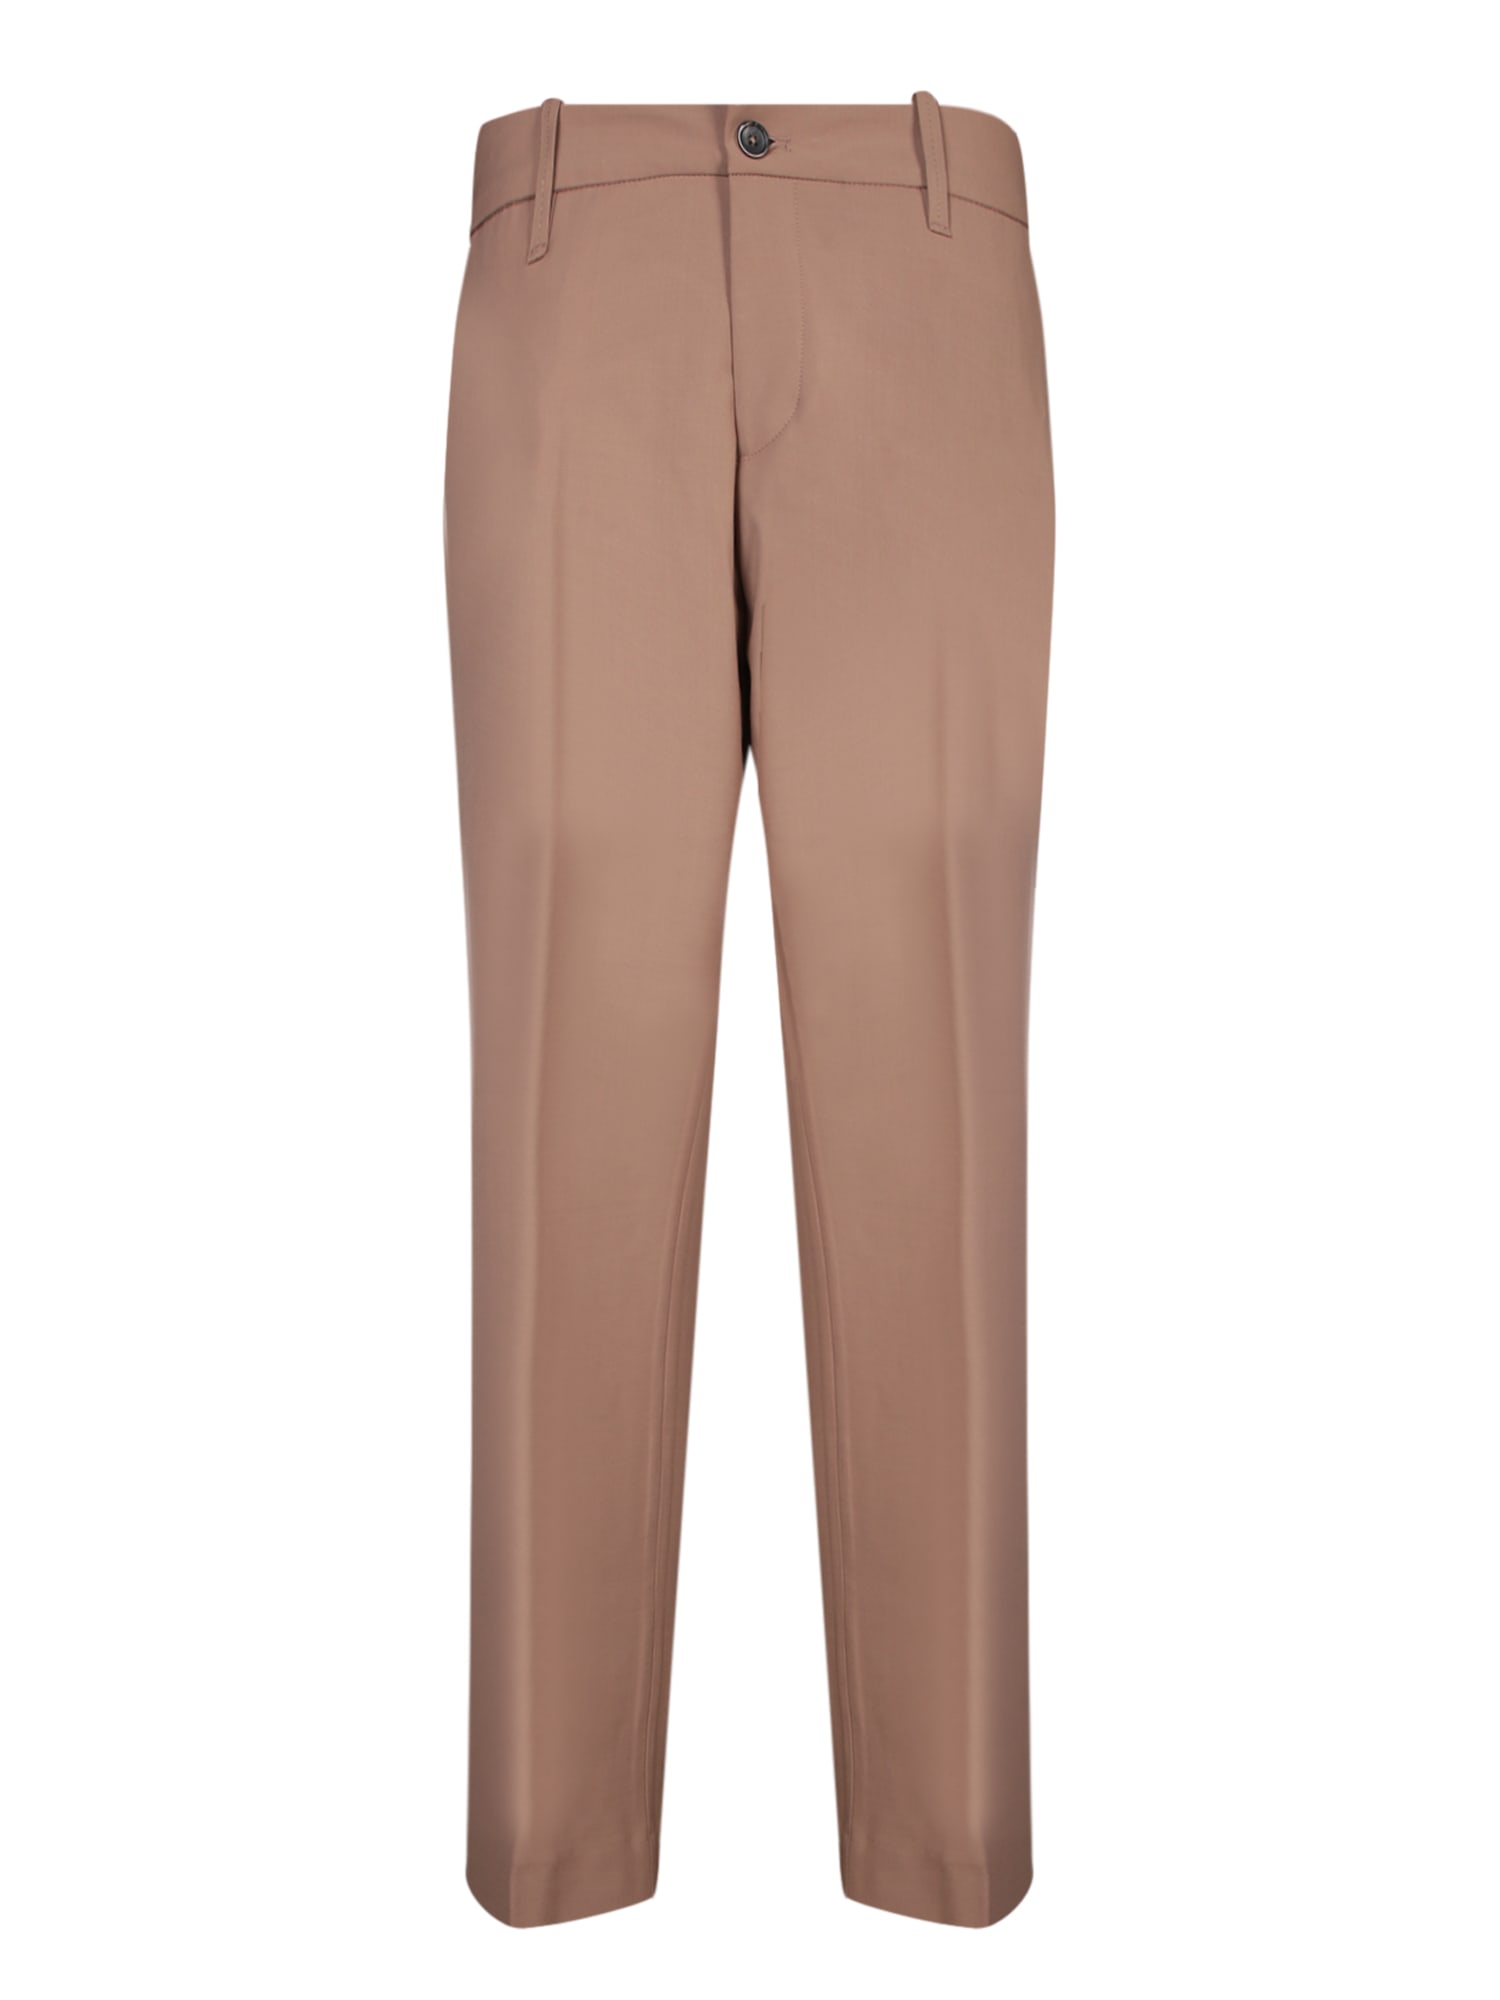 Telana Brown Tailored Trousers